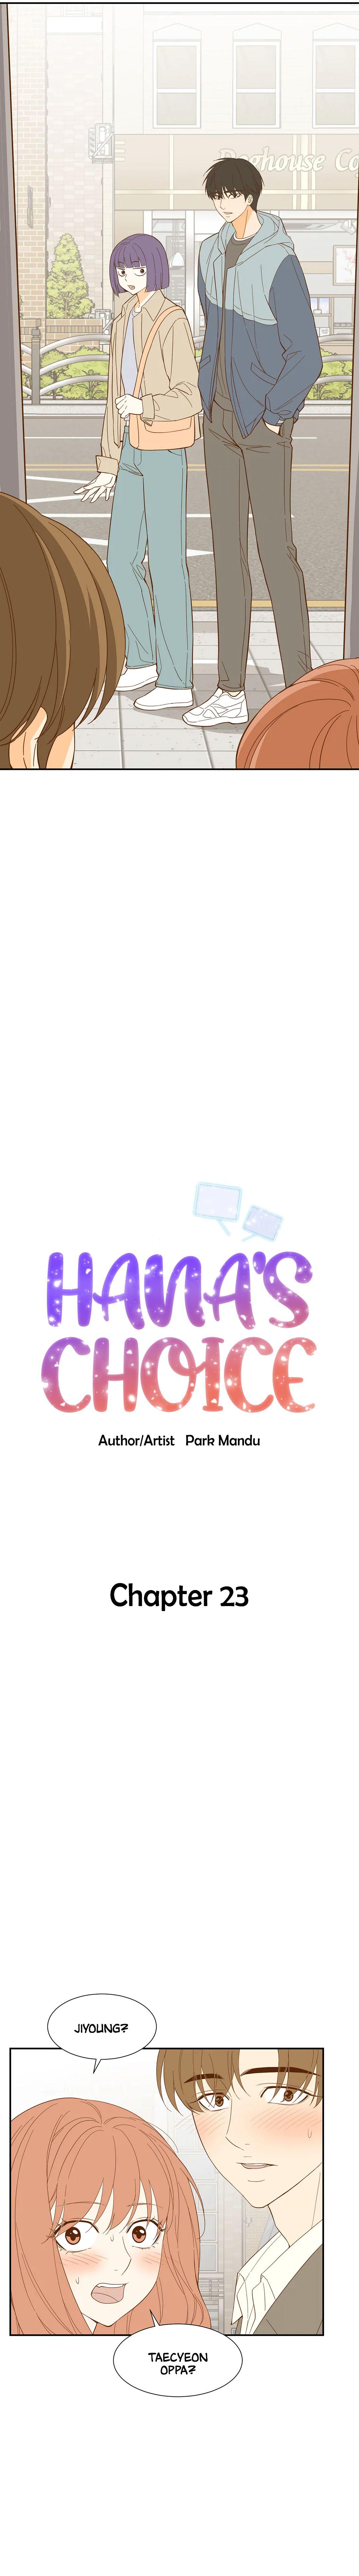 Hana’s Choice Chapter 23 - Page 2